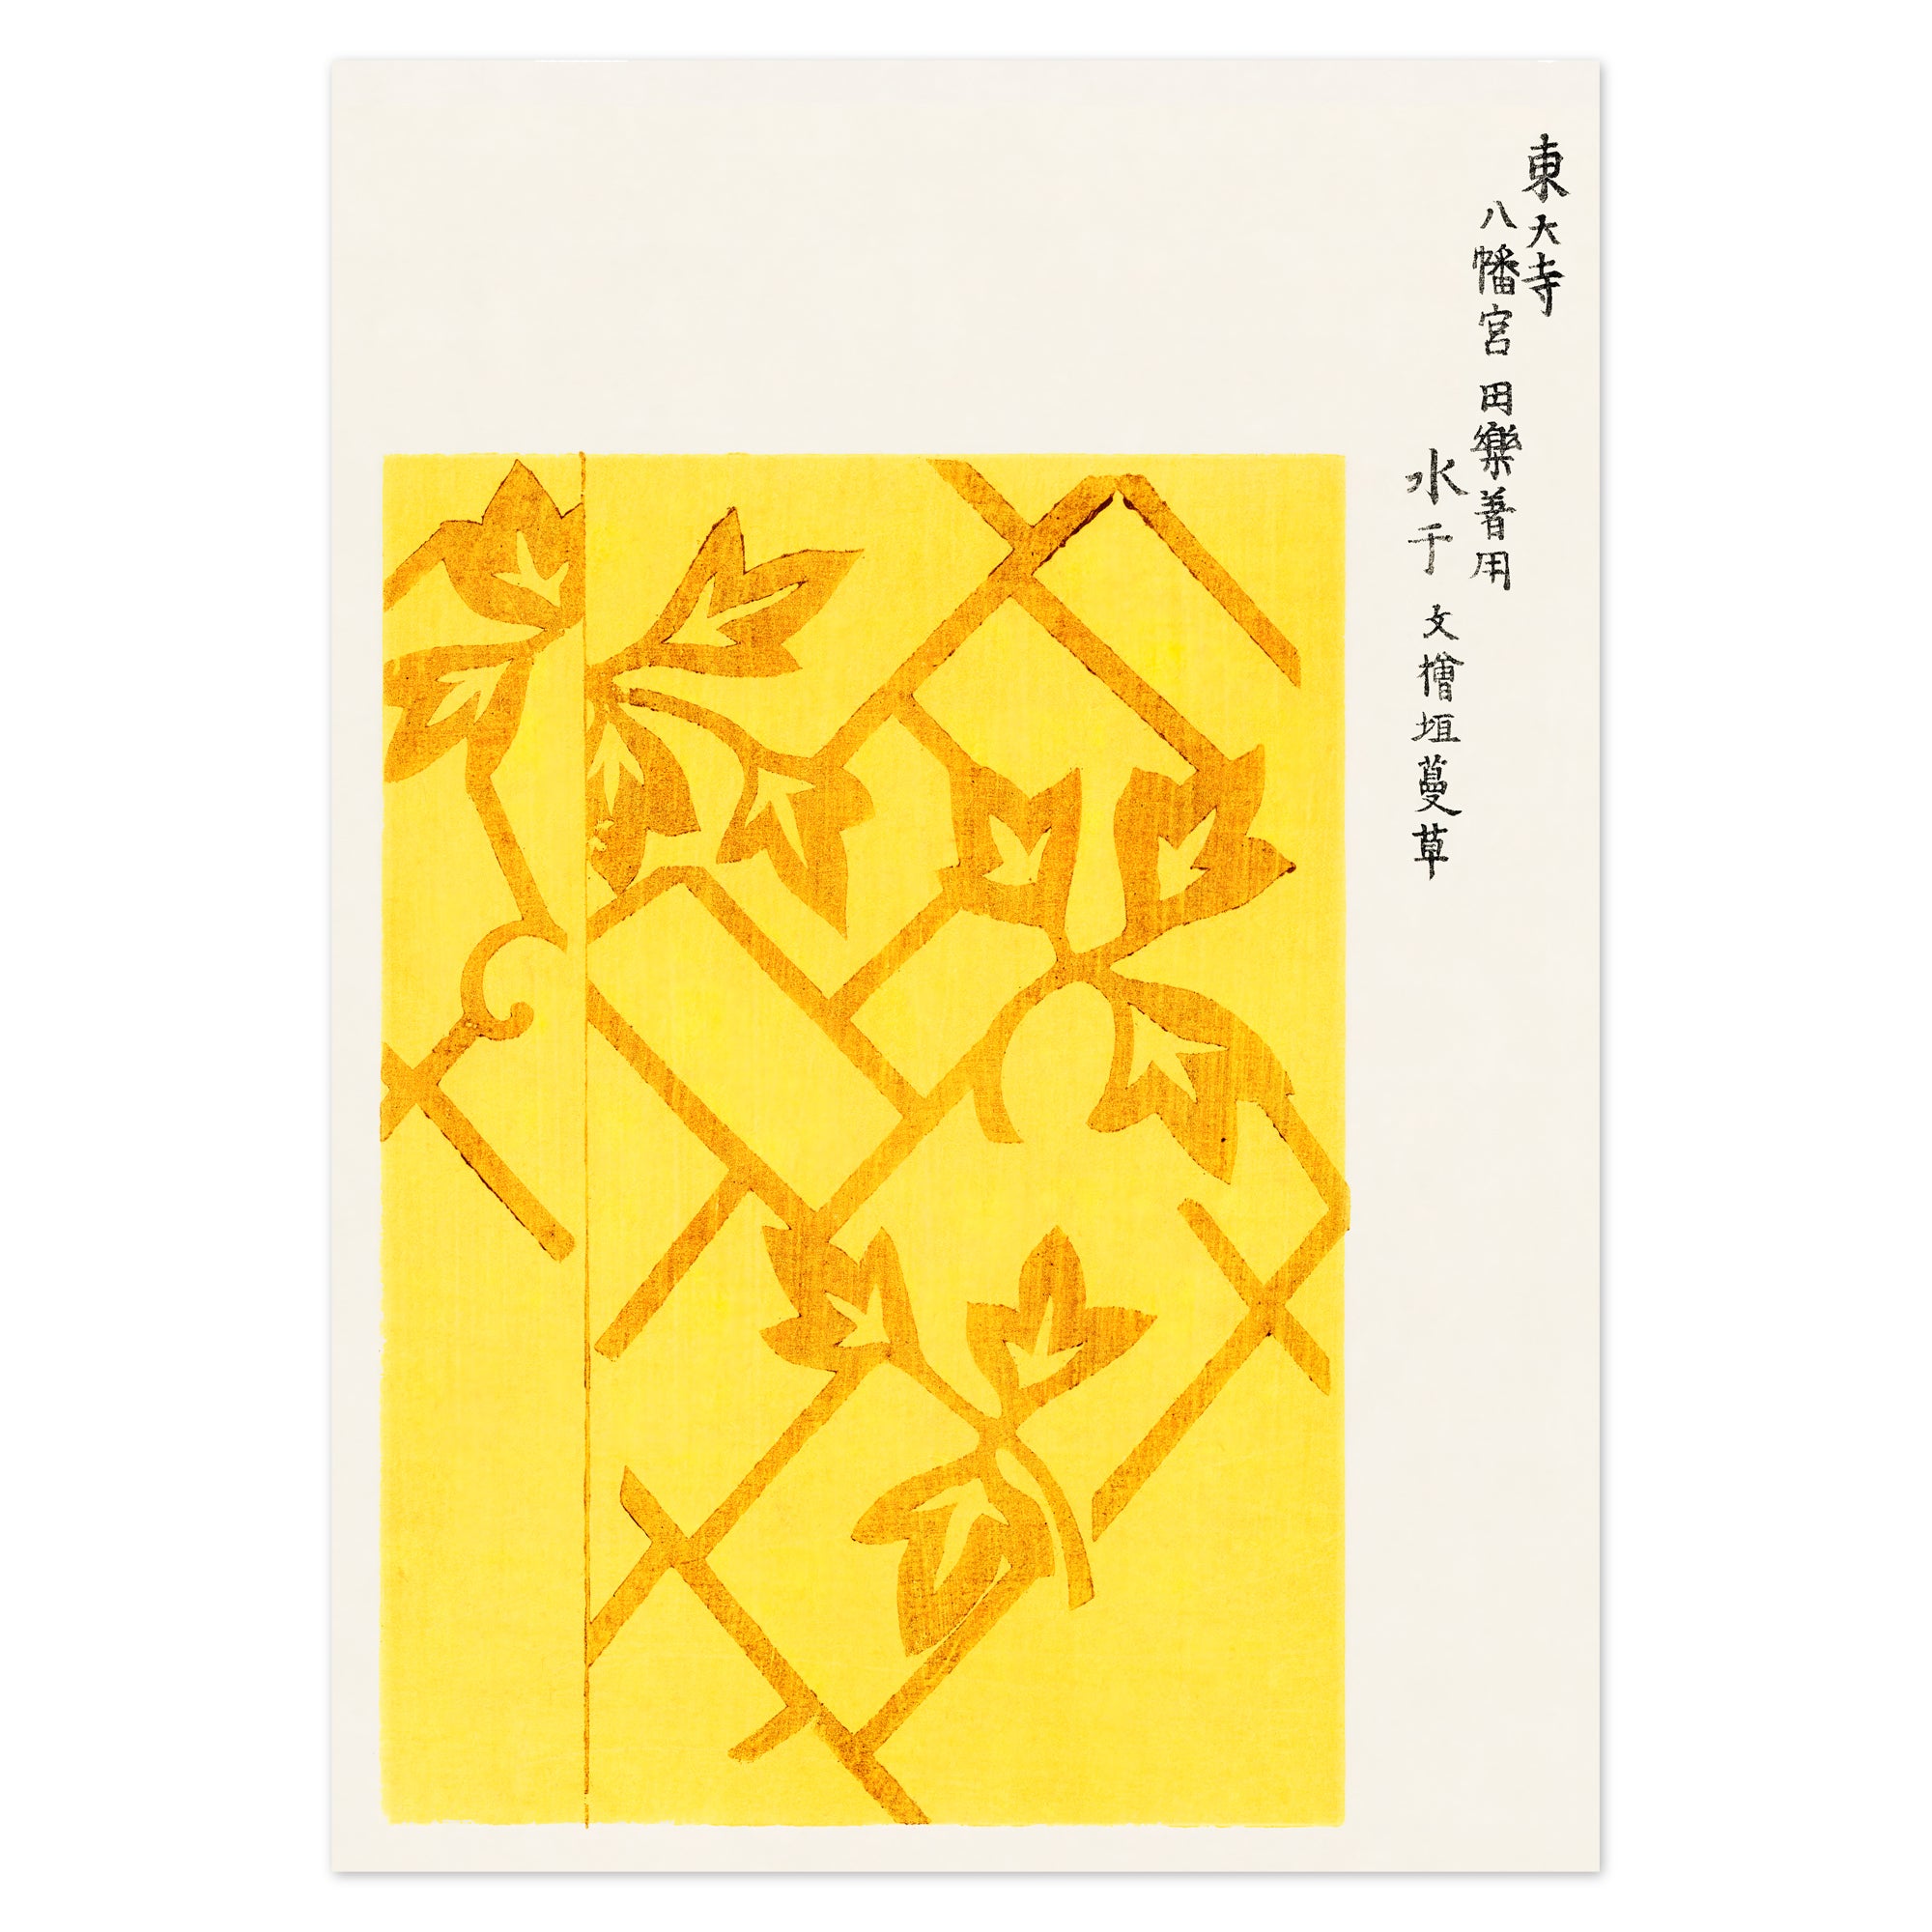 Taguchi Tomoki Poster - Yellow Print of Seagulls